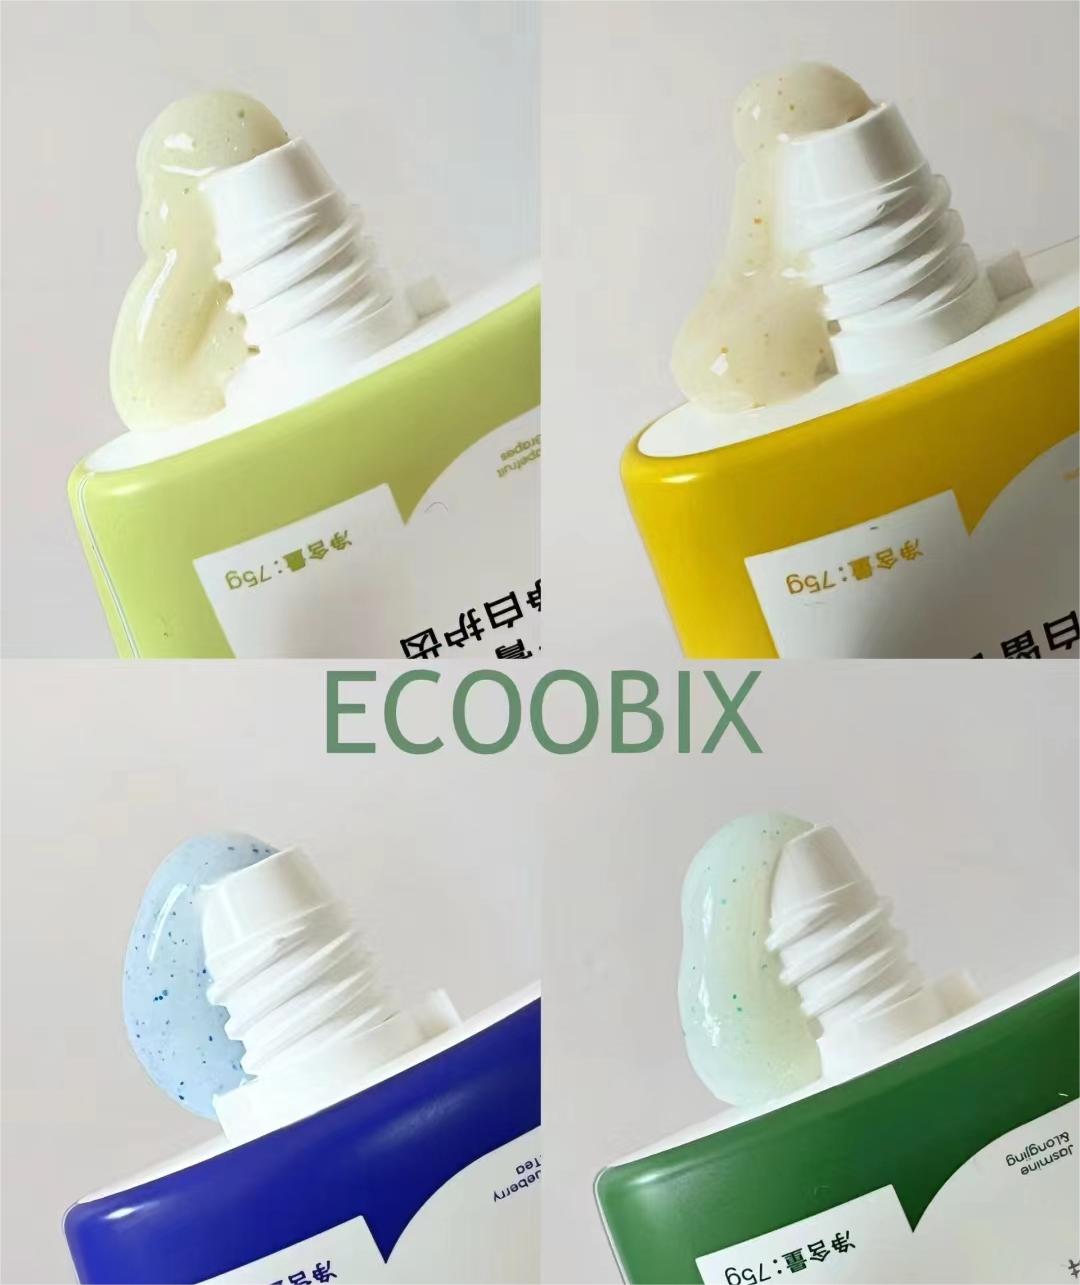 ECOOBIX Amino Acid Anti-Sugar Toothpaste 75g 白惜氨基酸抗糖牙膏